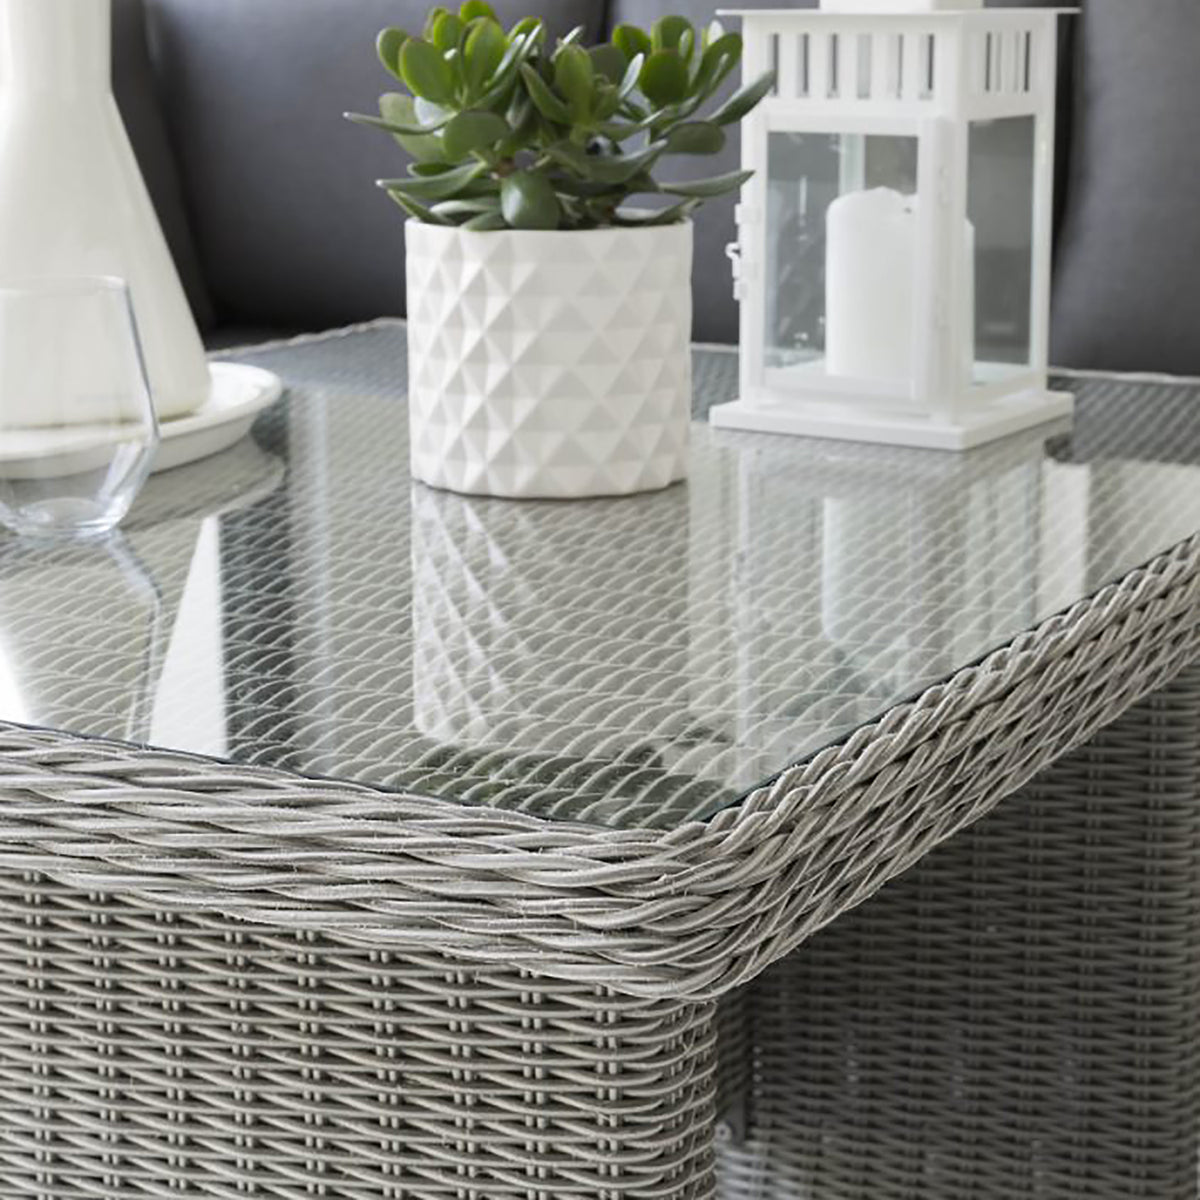 Kettler Palma Mini Corner White Wash Wicker Outdoor Sofa Set with Glass Top Table